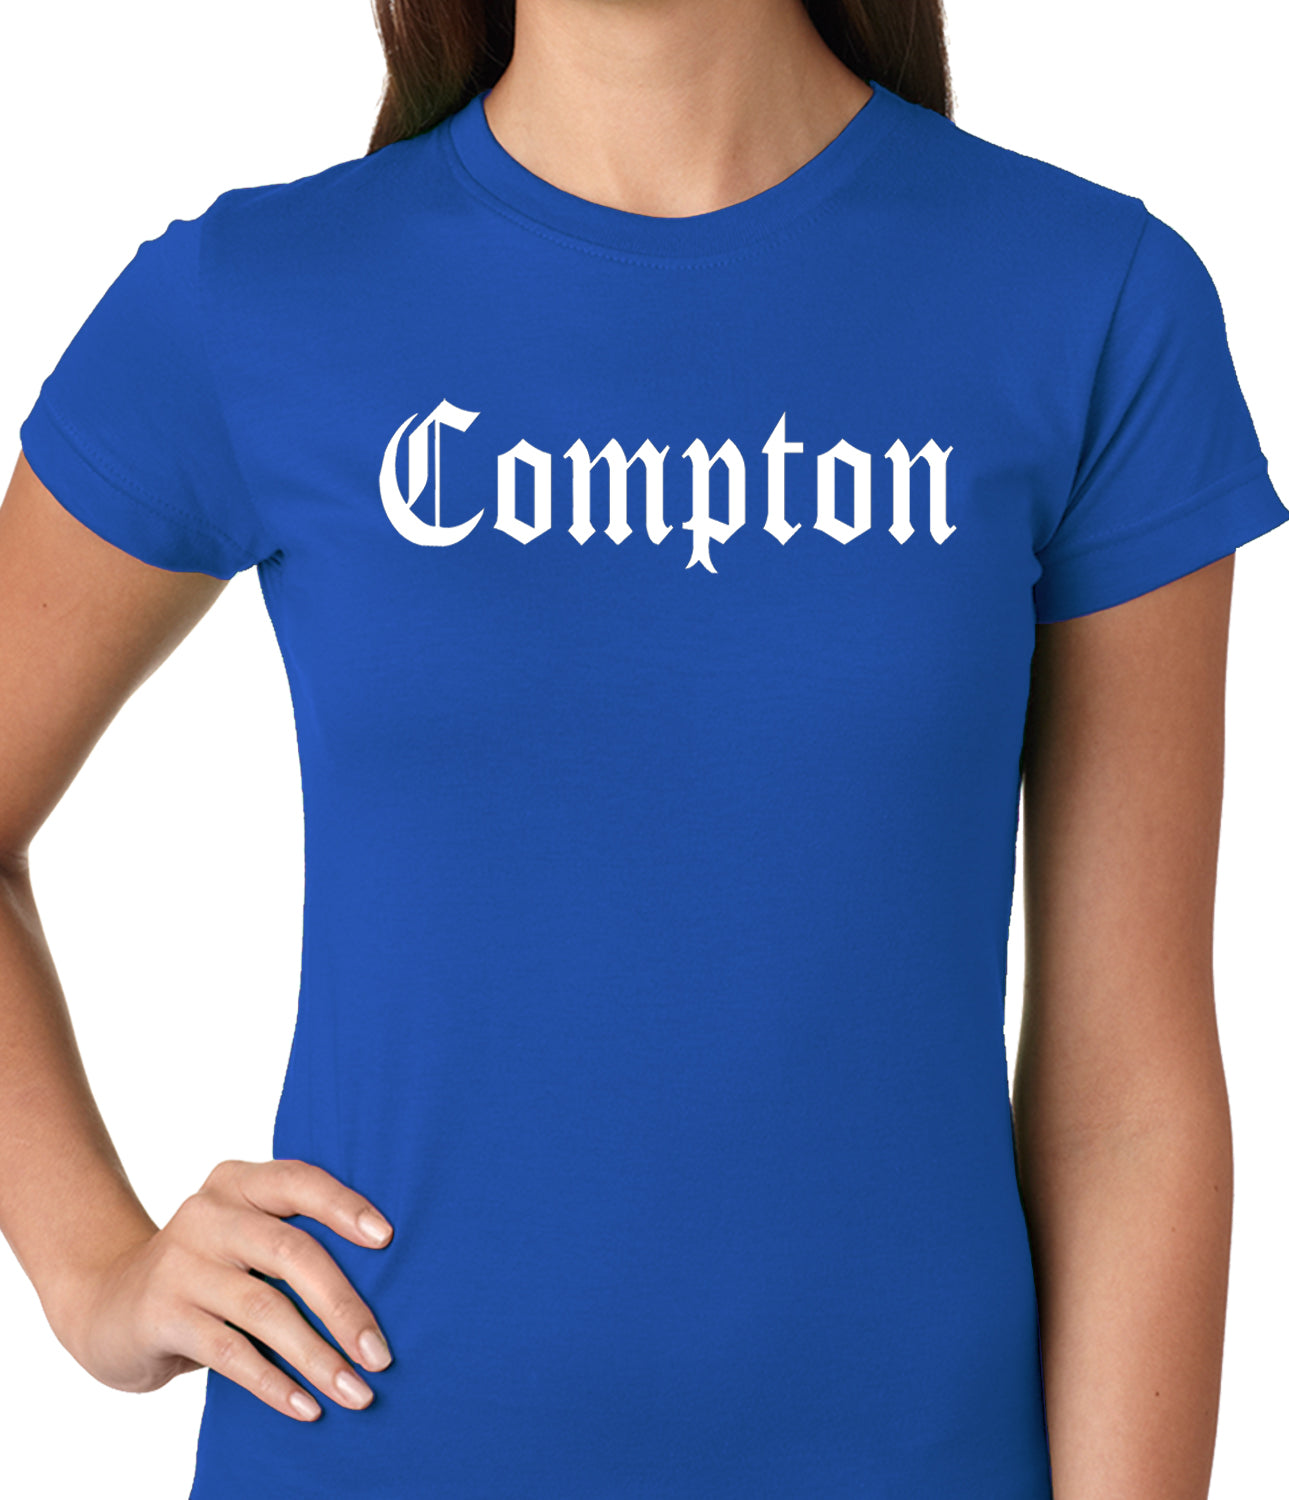 City Of Compton, California Ladies T-shirt